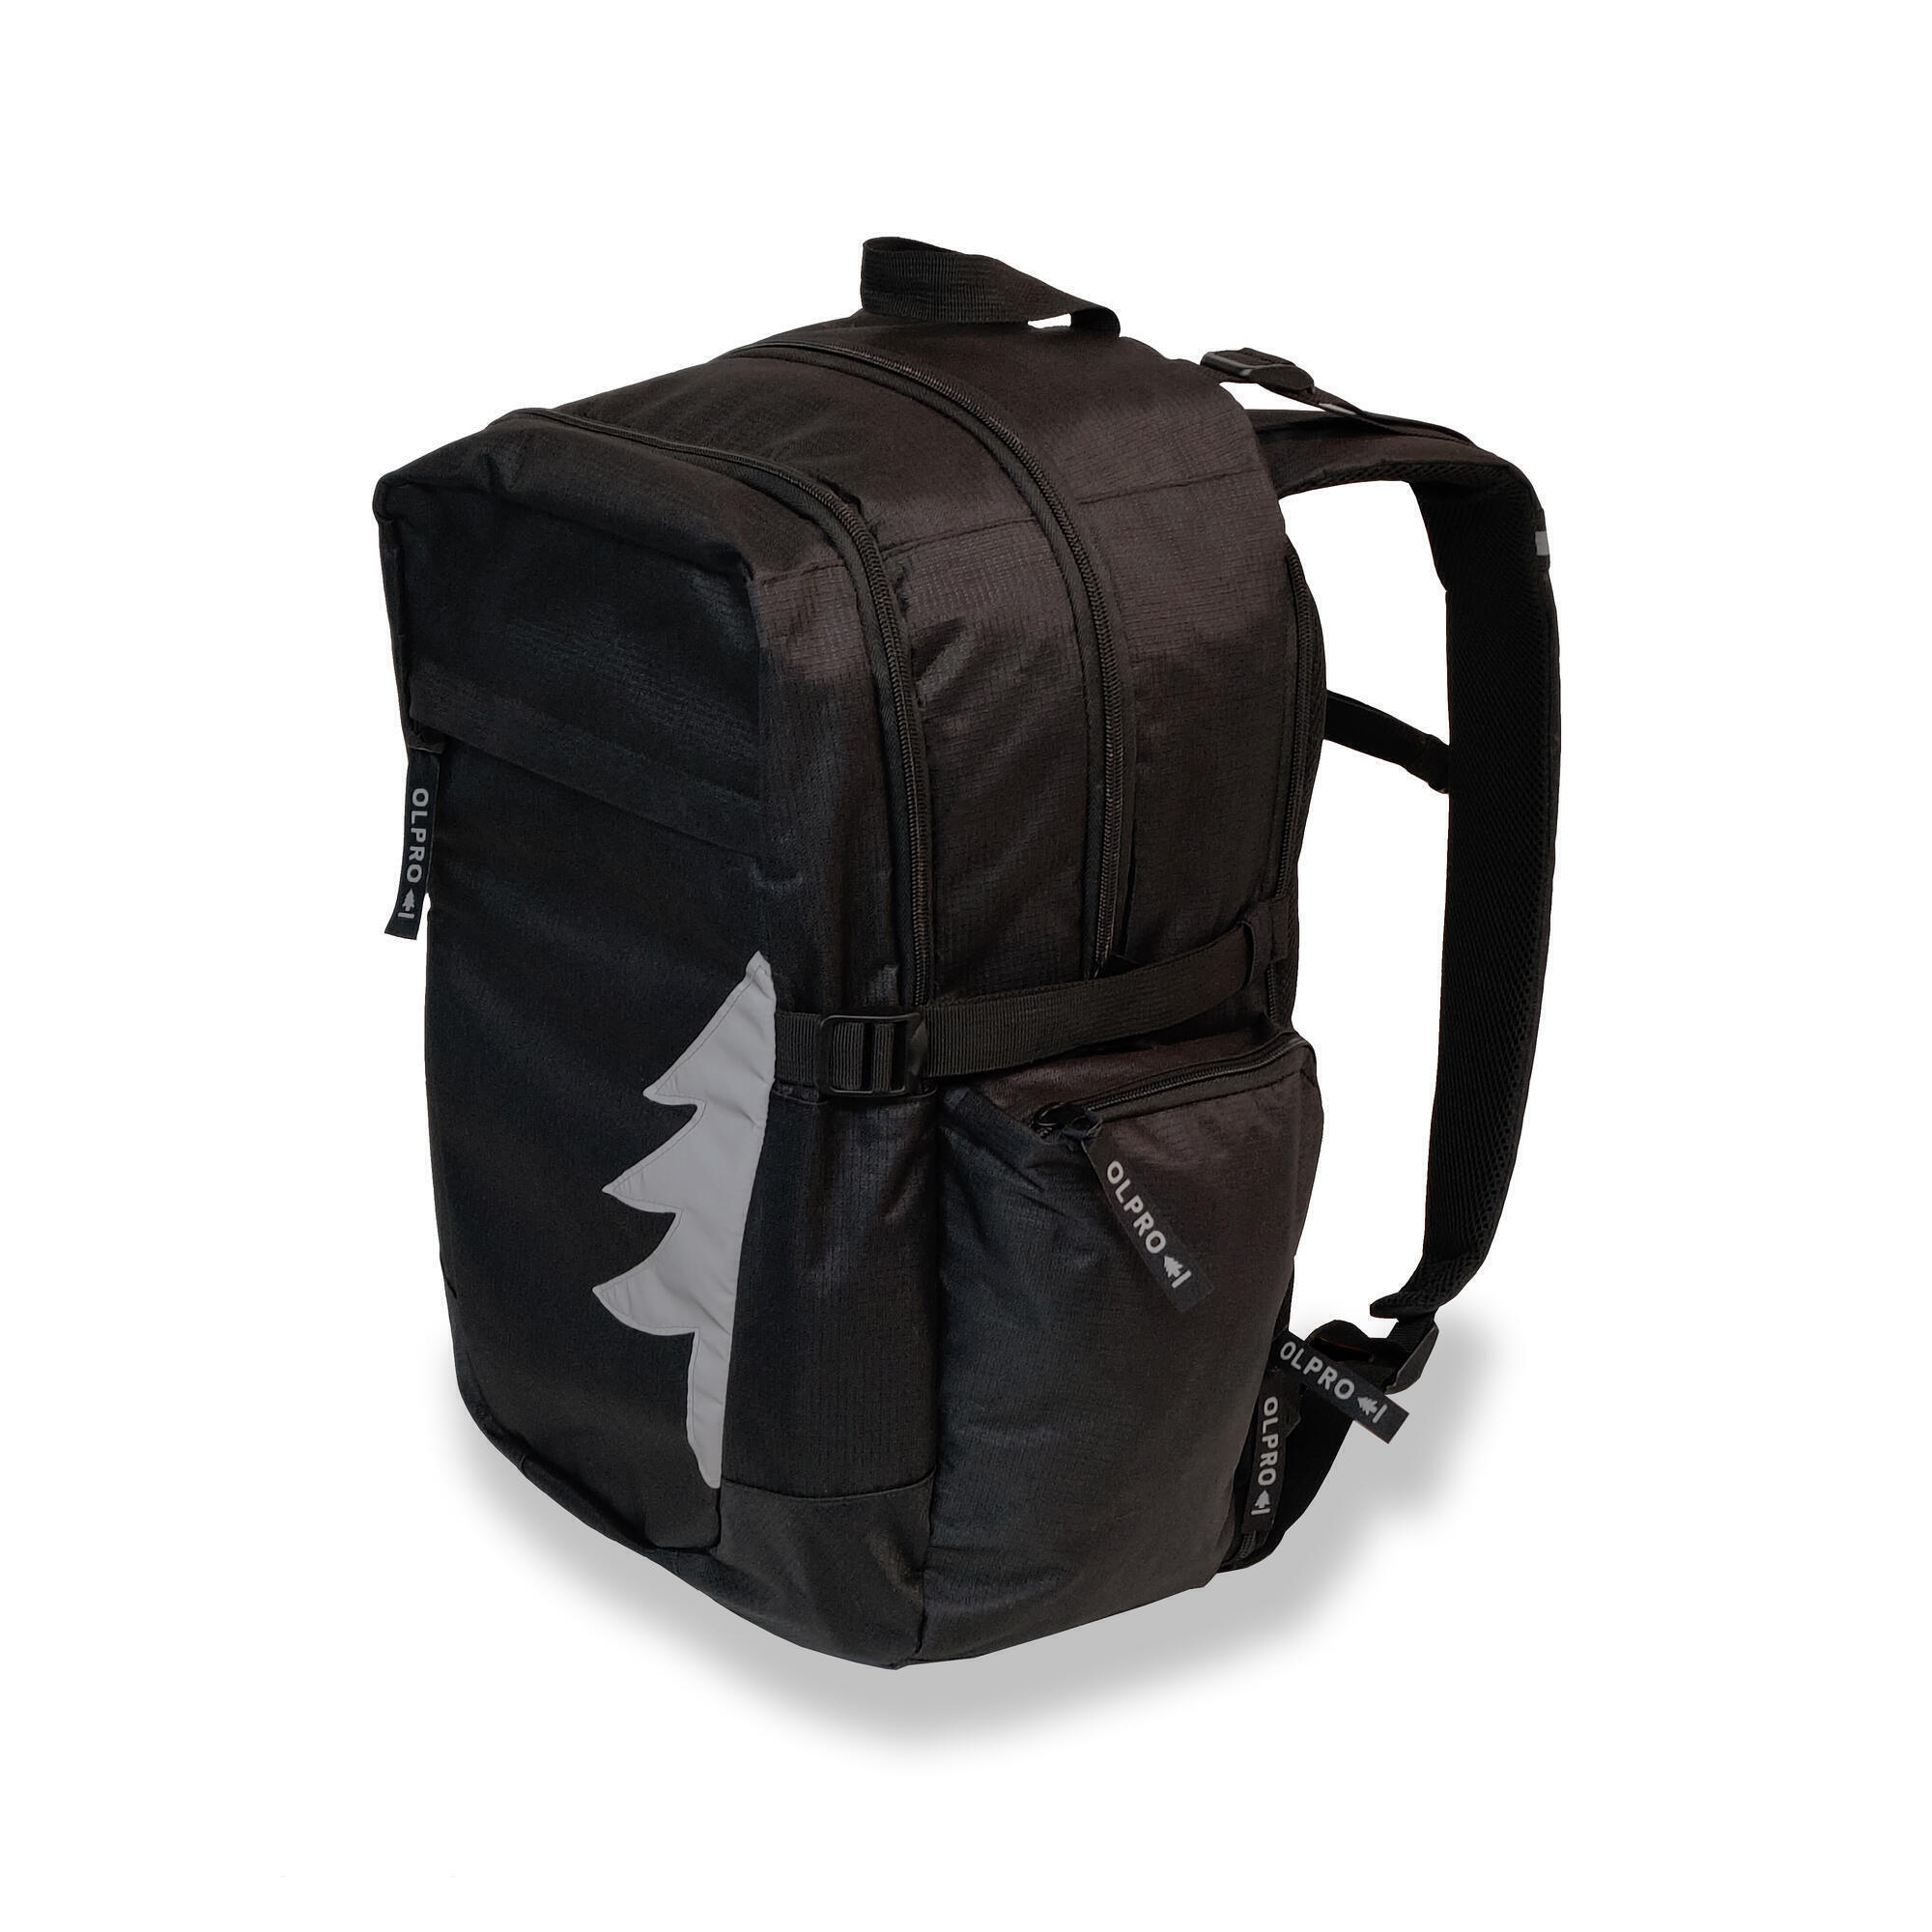 OLPRO 32L Daysac Backpack 1/7